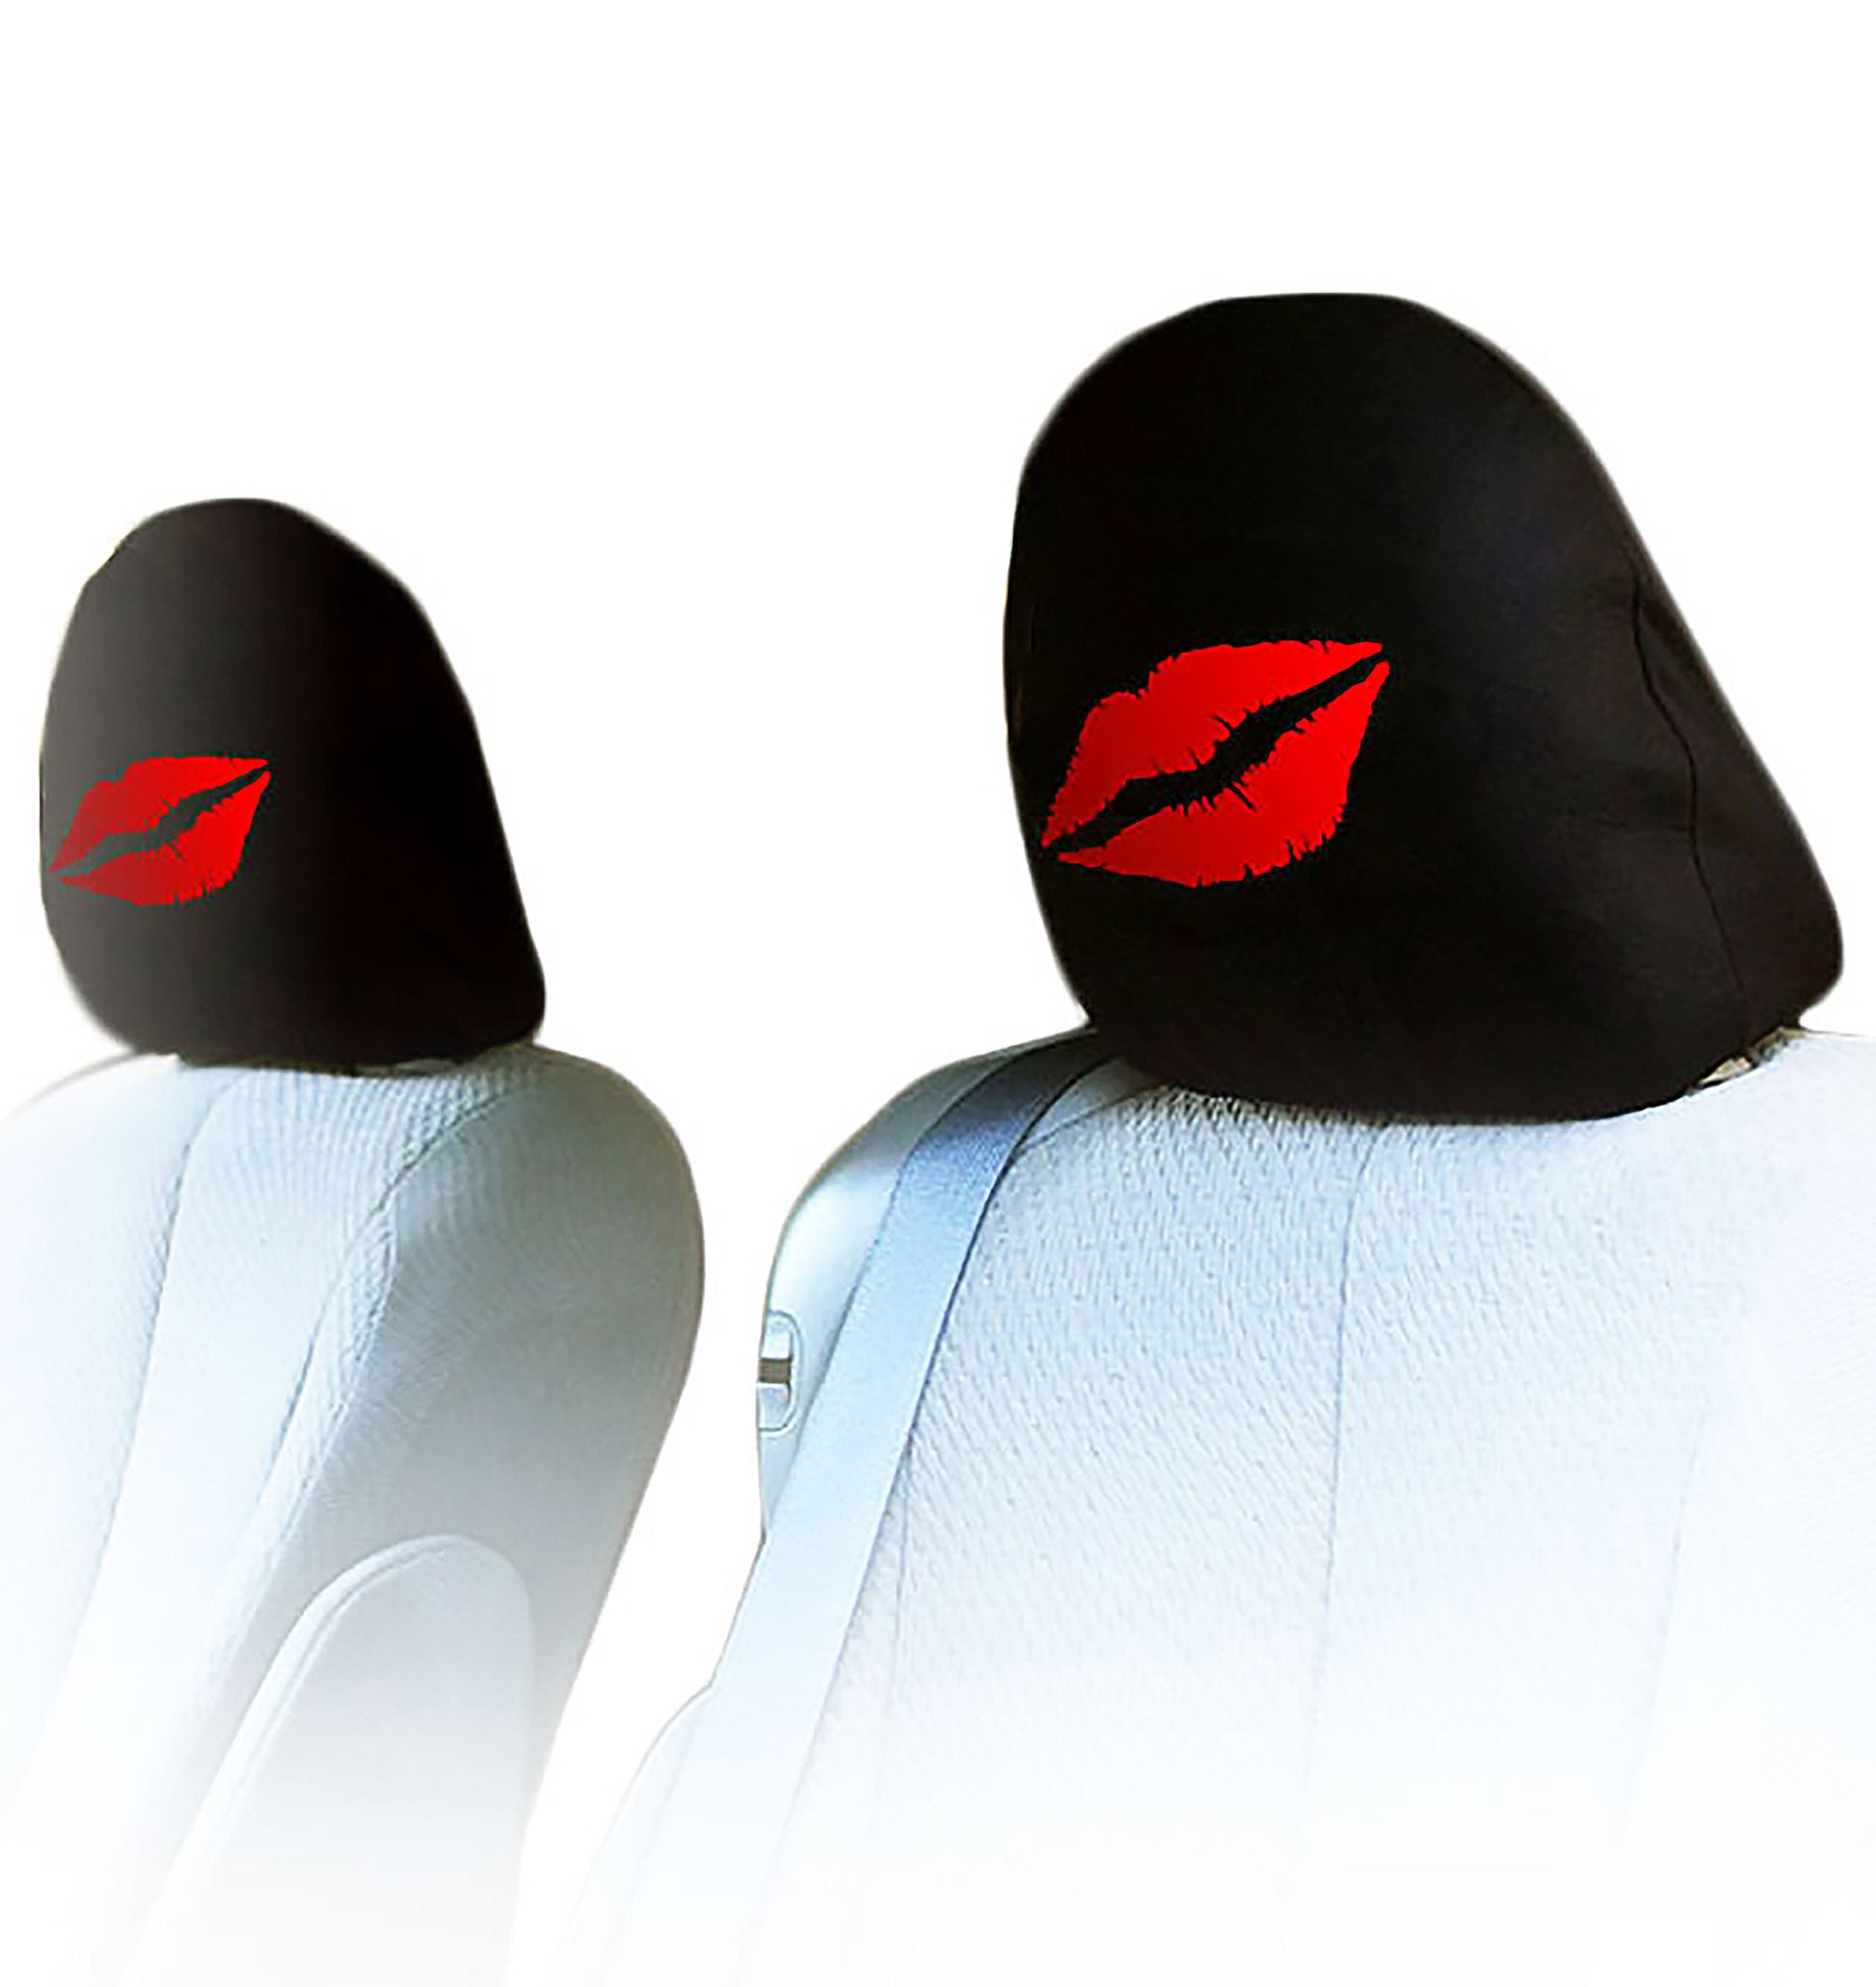 Lip headrest cover pair